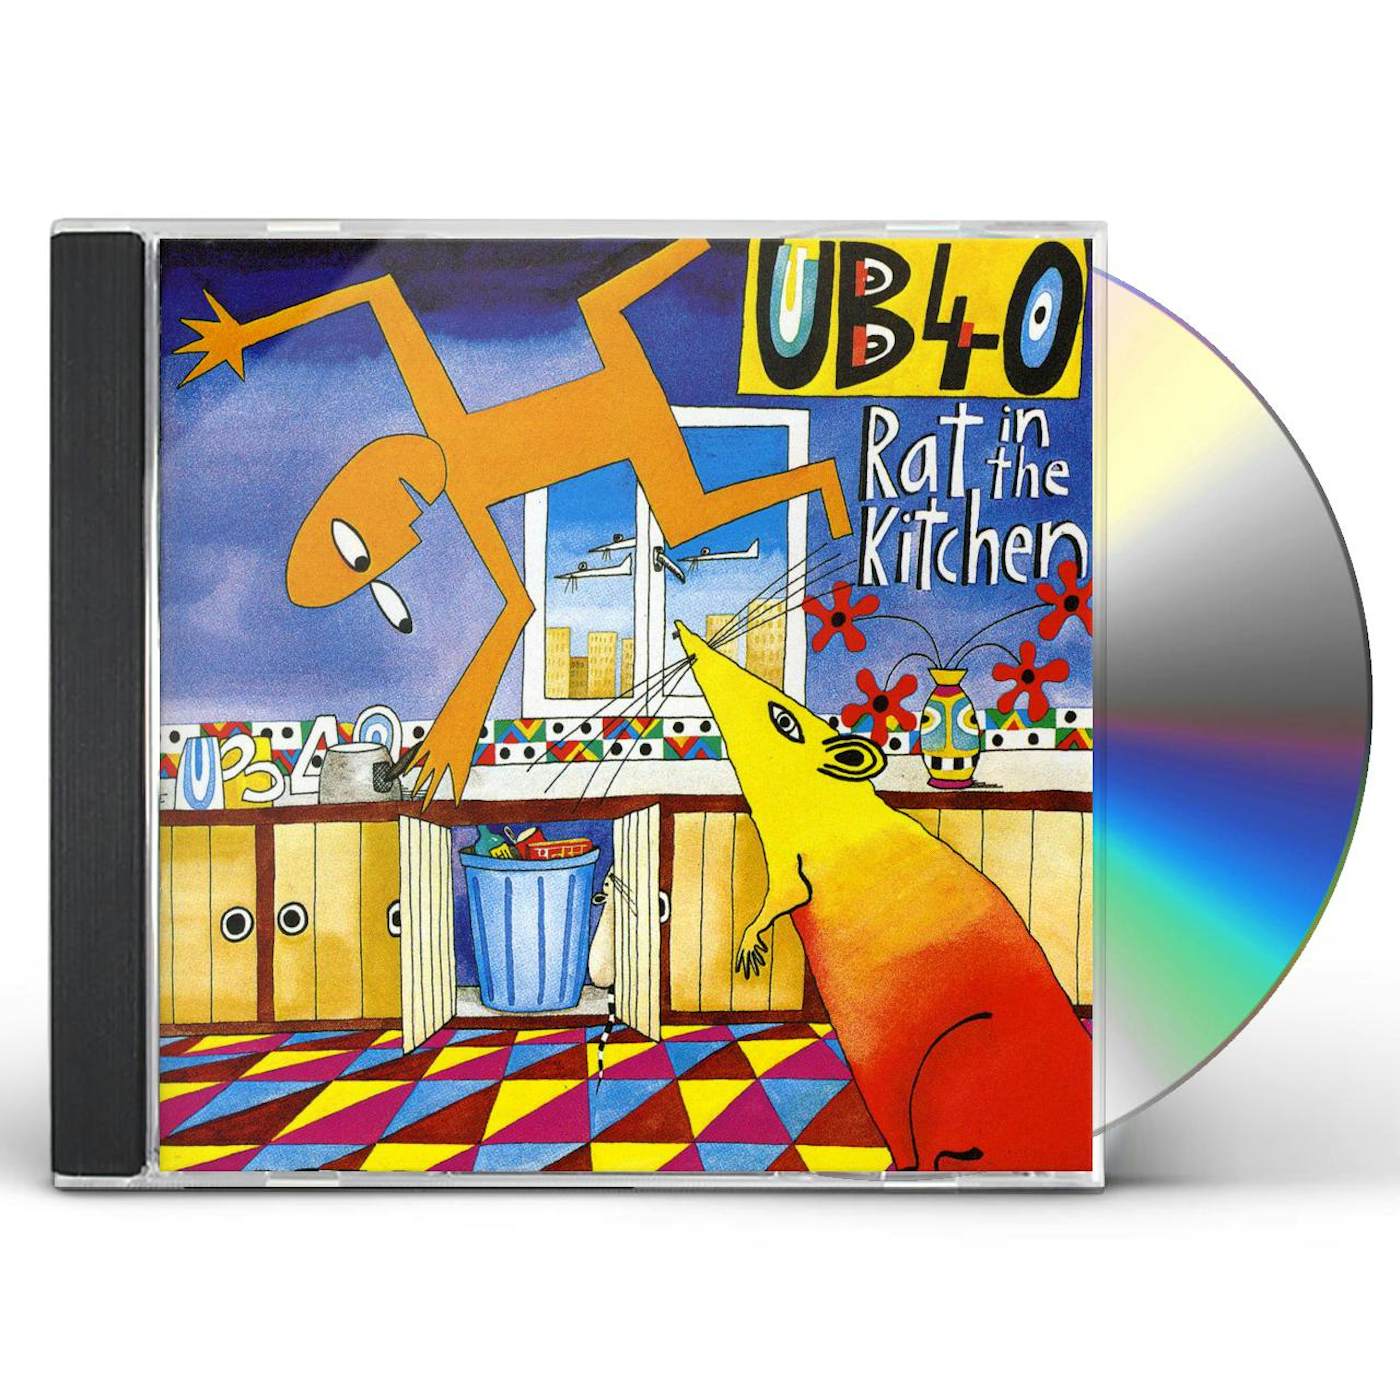 UB40 RAT IN THE KITCHEN CD